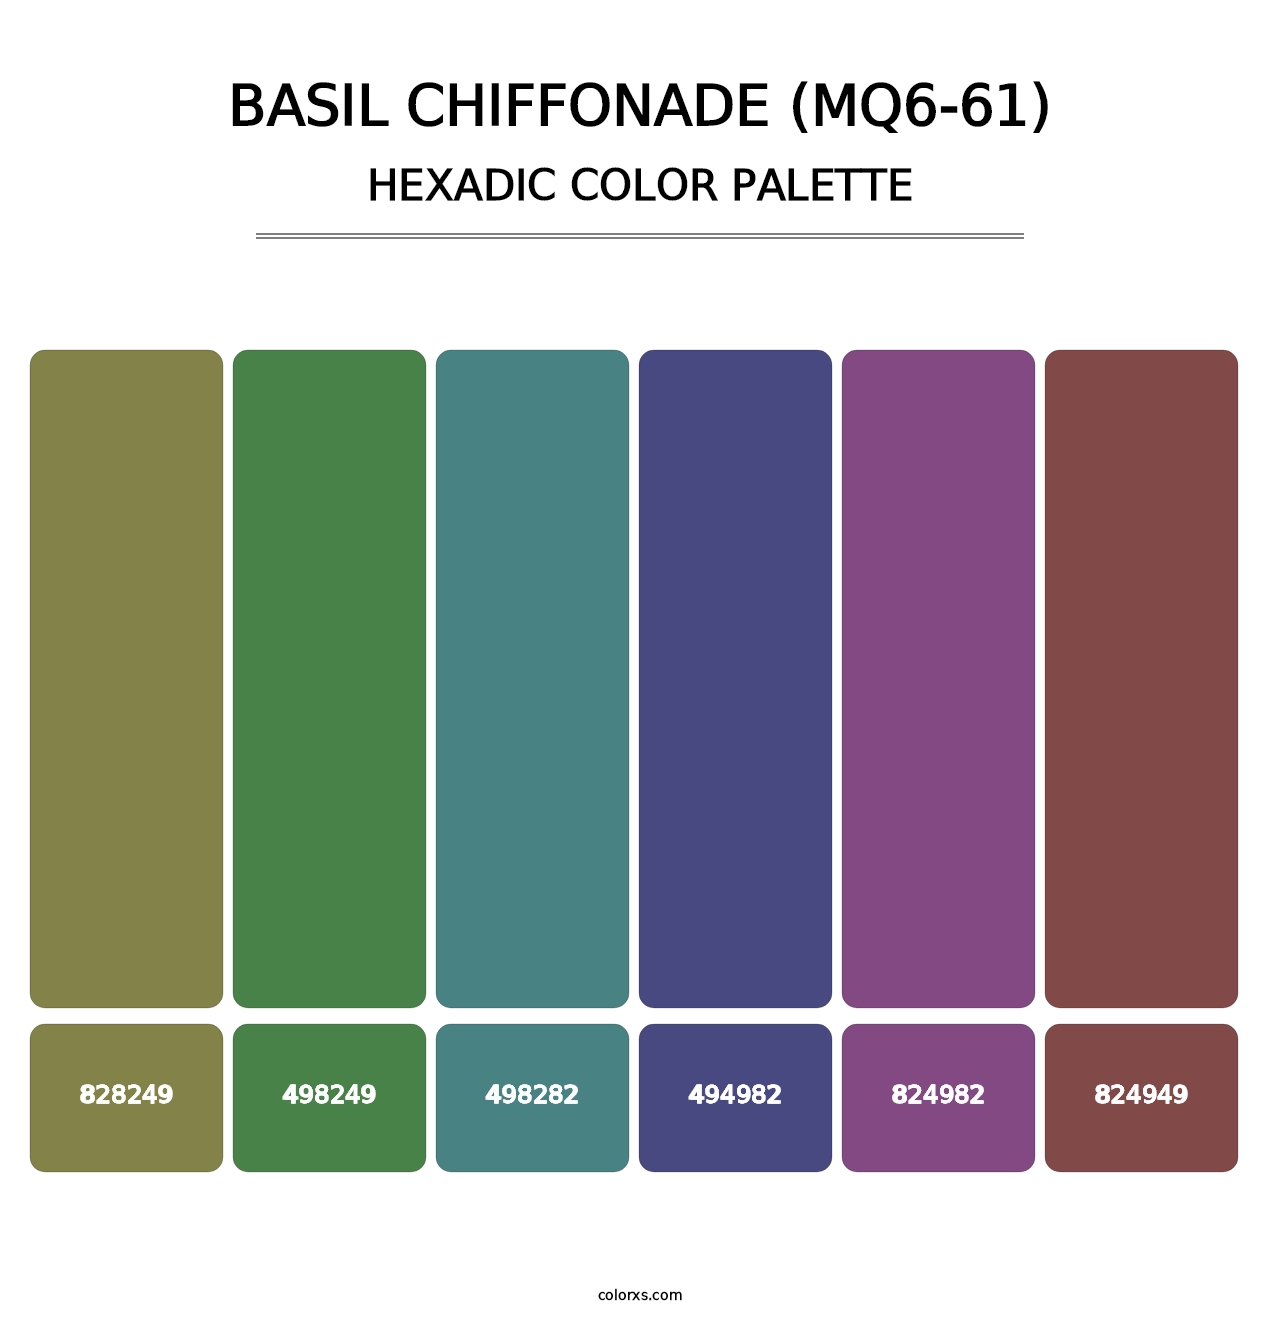 Basil Chiffonade (MQ6-61) - Hexadic Color Palette